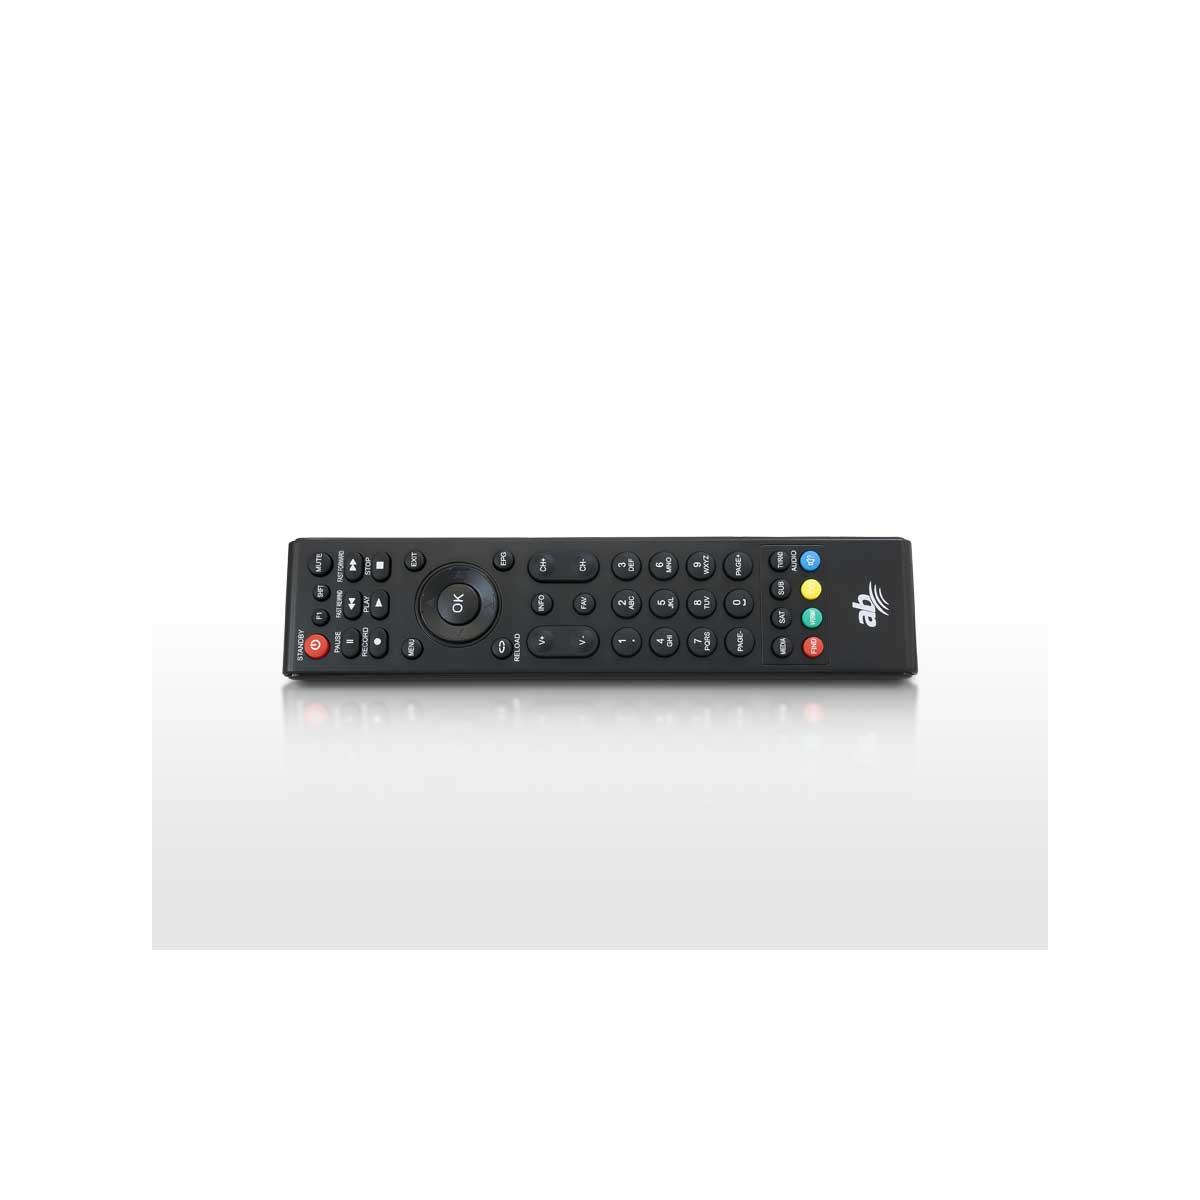 schwarz) Combo Sat-Receiver (H.265), DVB-C, DVB-T2 (HDTV, DVB-S, DVB-S2, AB-COM PVR-Funktion=optional, 752HD CryptoBox